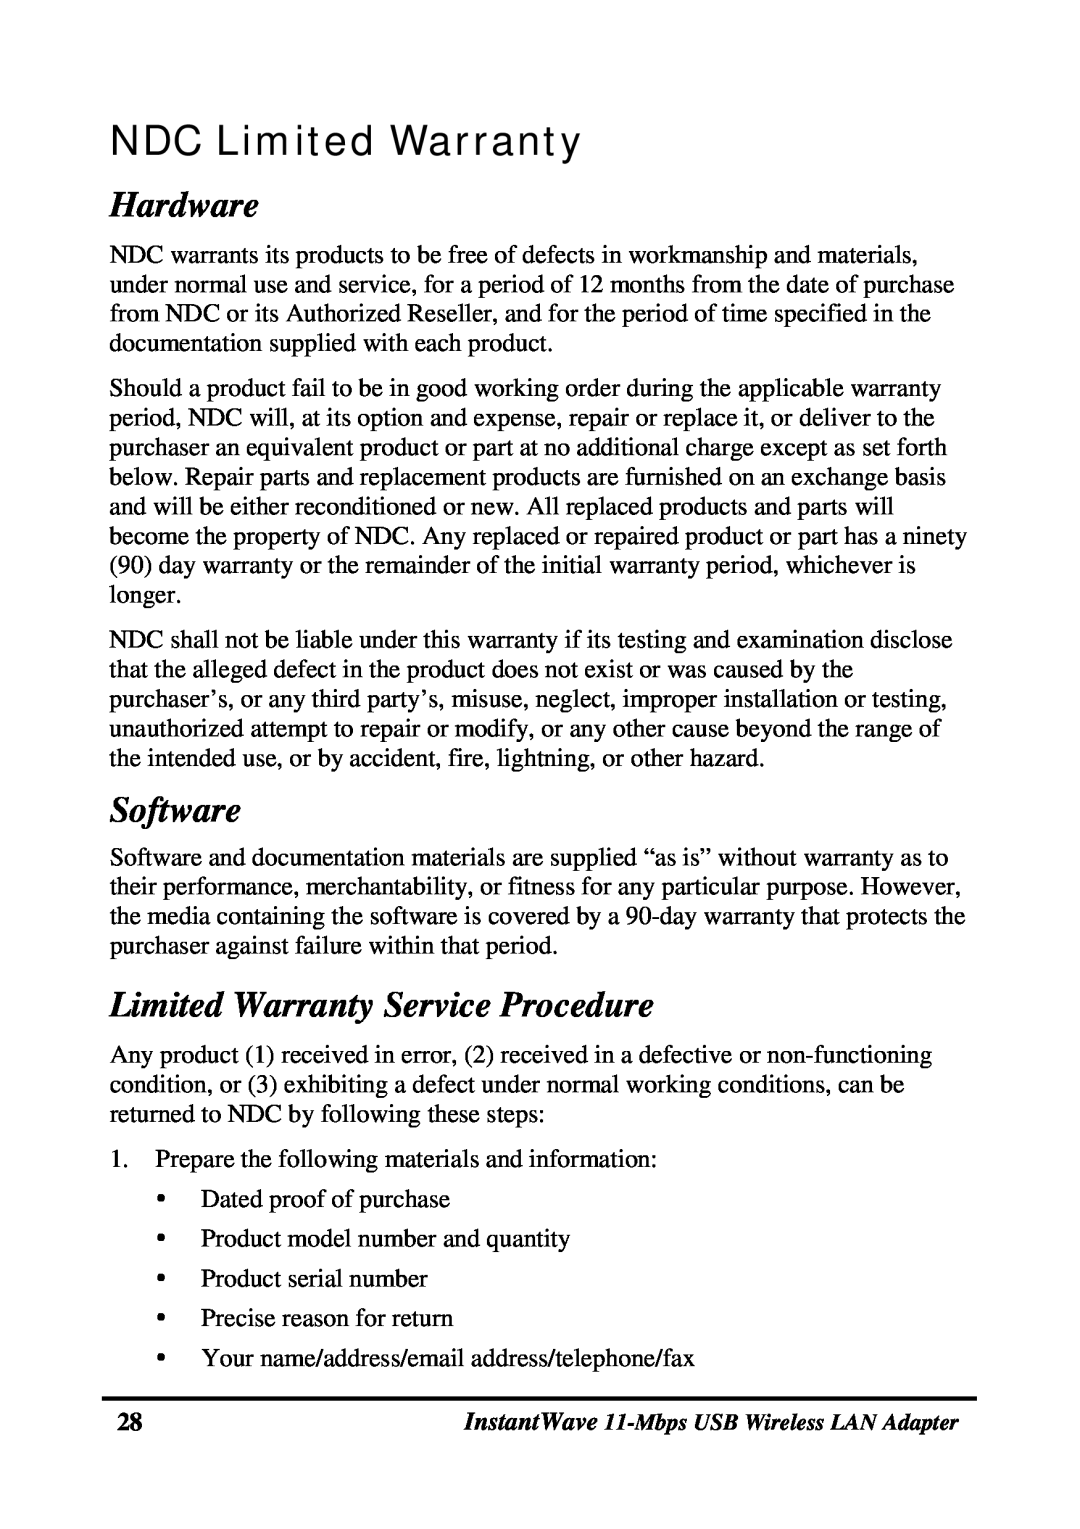 NDC comm NWH4020 manual NDC Limited Warranty, Hardware, Software, Limited Warranty Service Procedure 